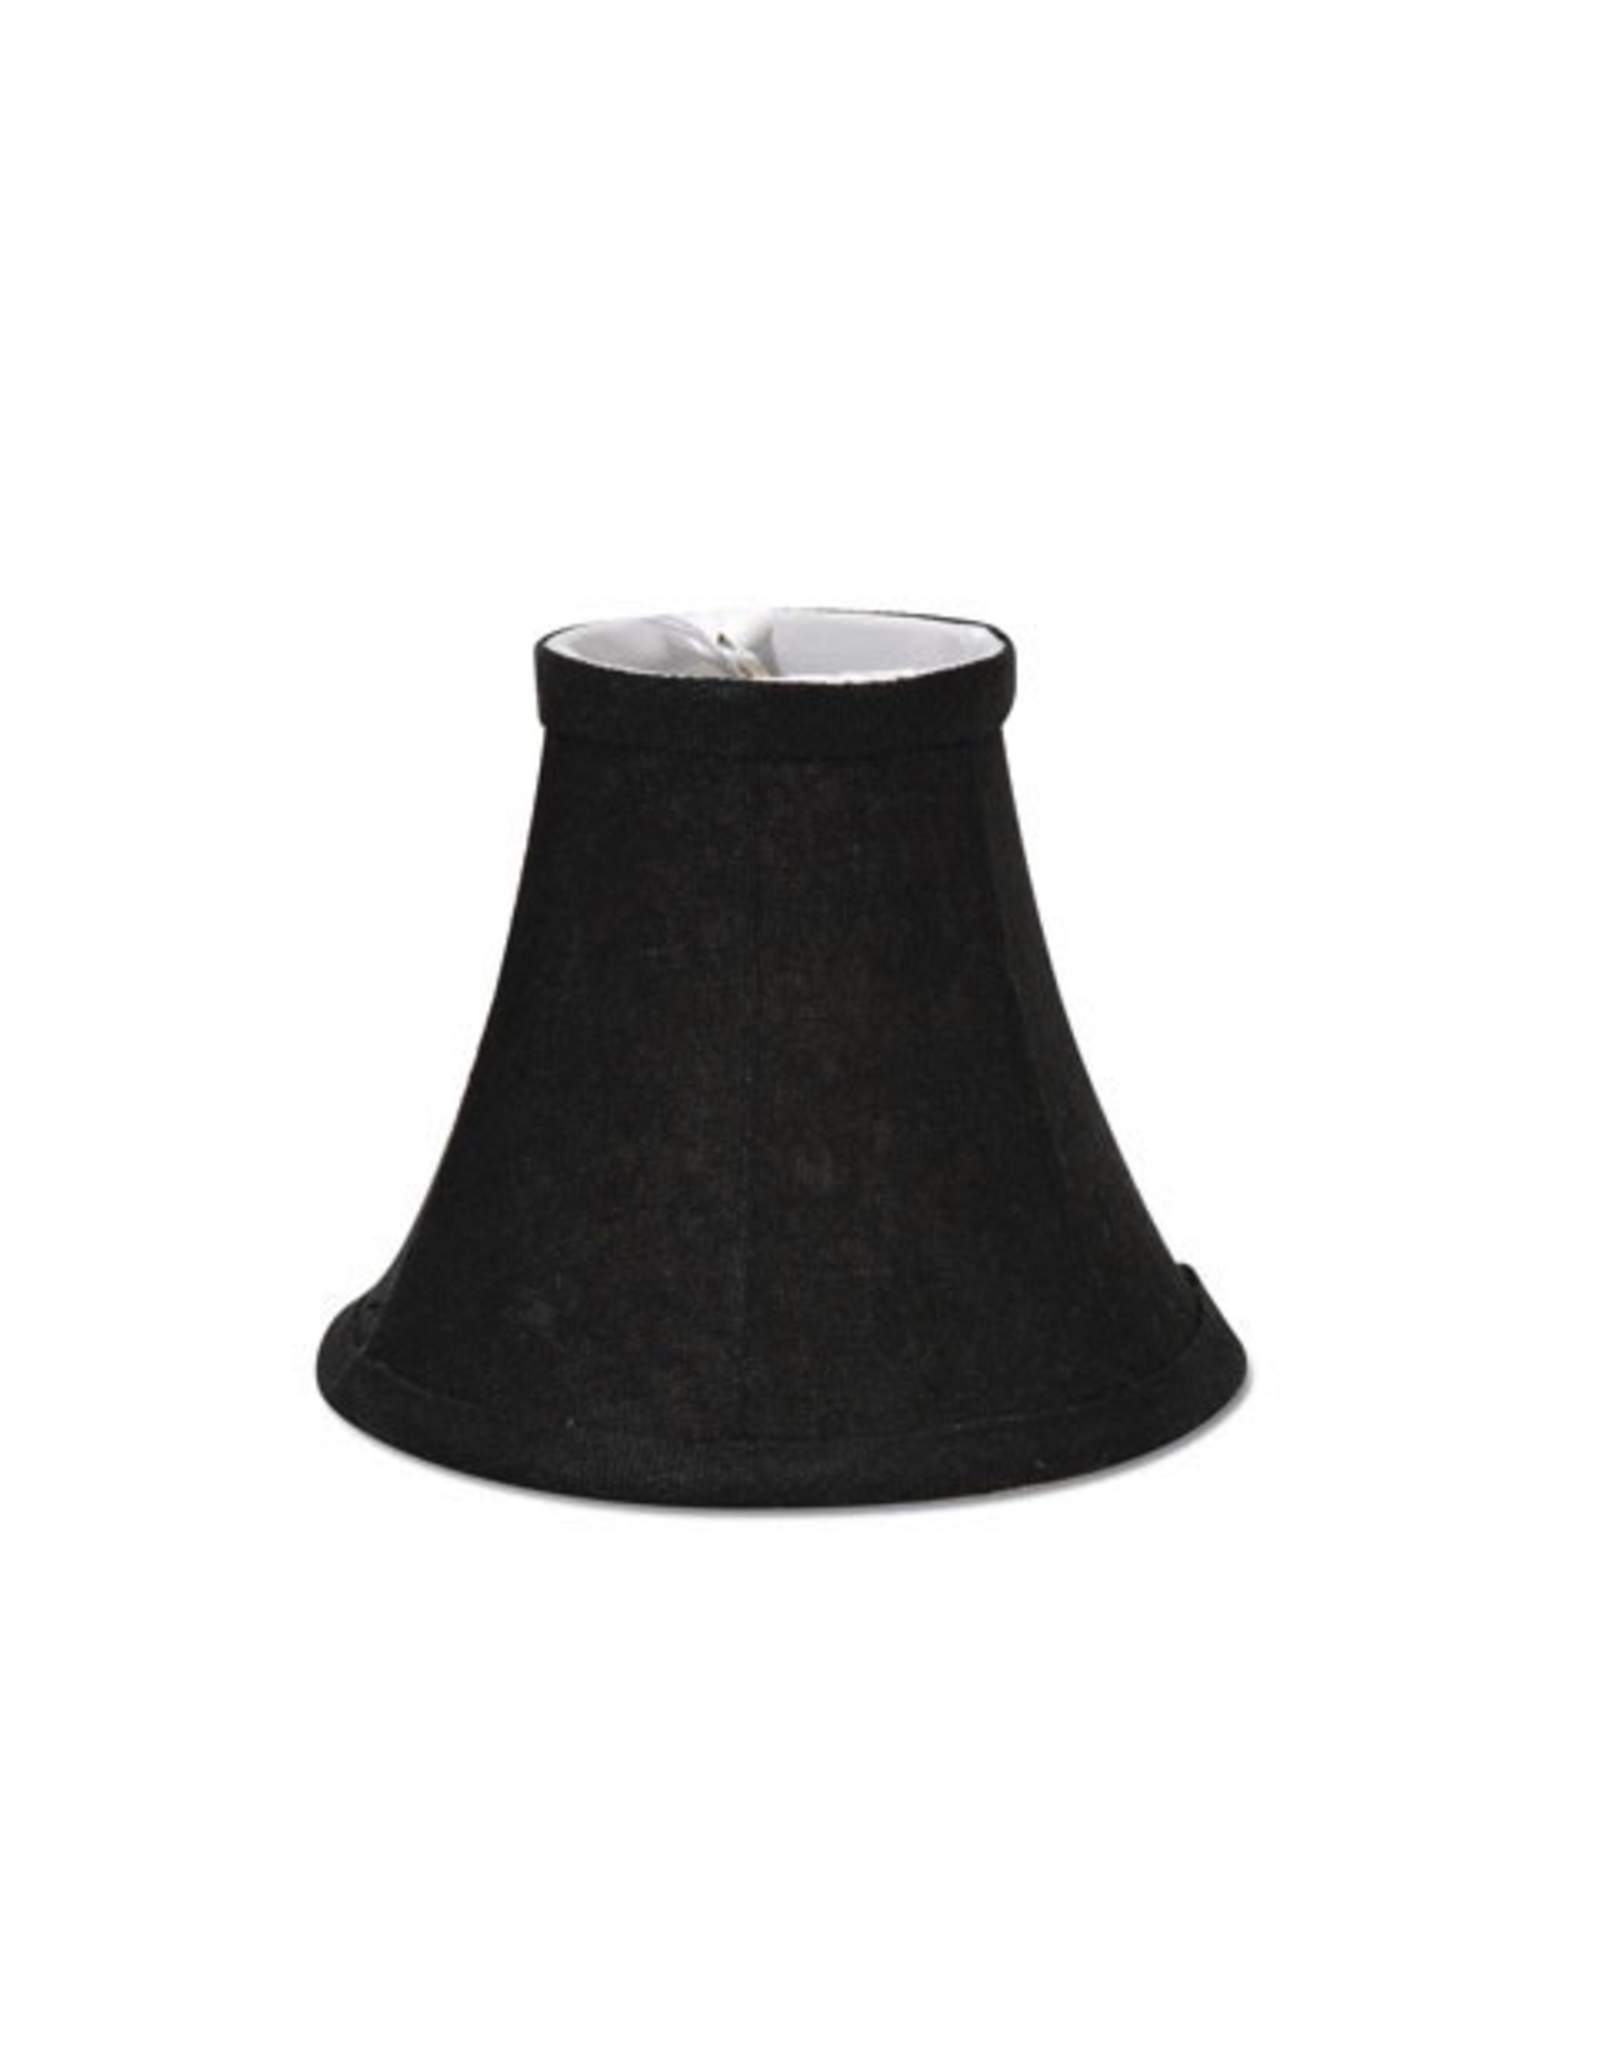 Darice Lamp Shade Clip On Light Bulb Black 5 inch Black Texture